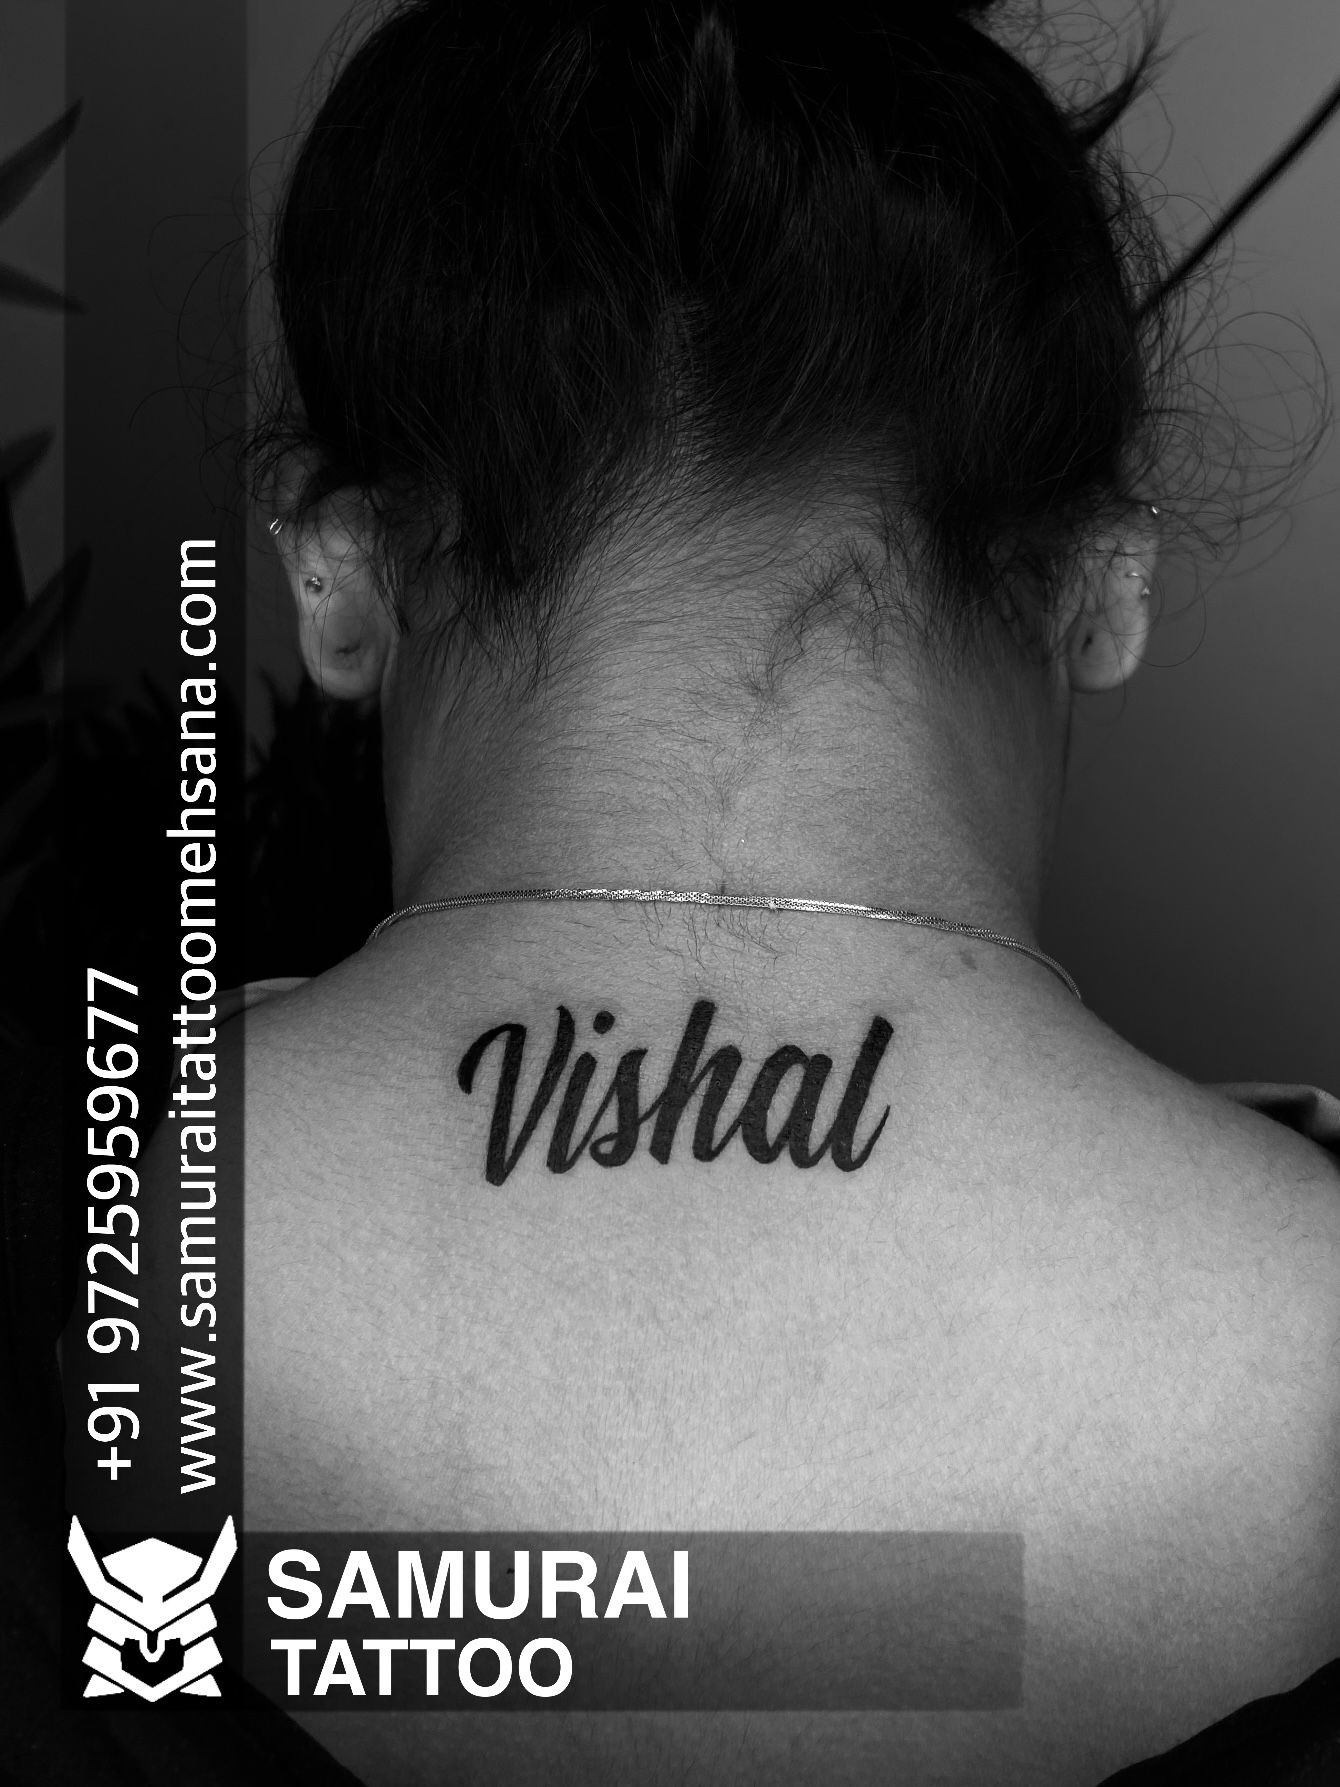 Discover 62 vishal name tattoo super hot  thtantai2